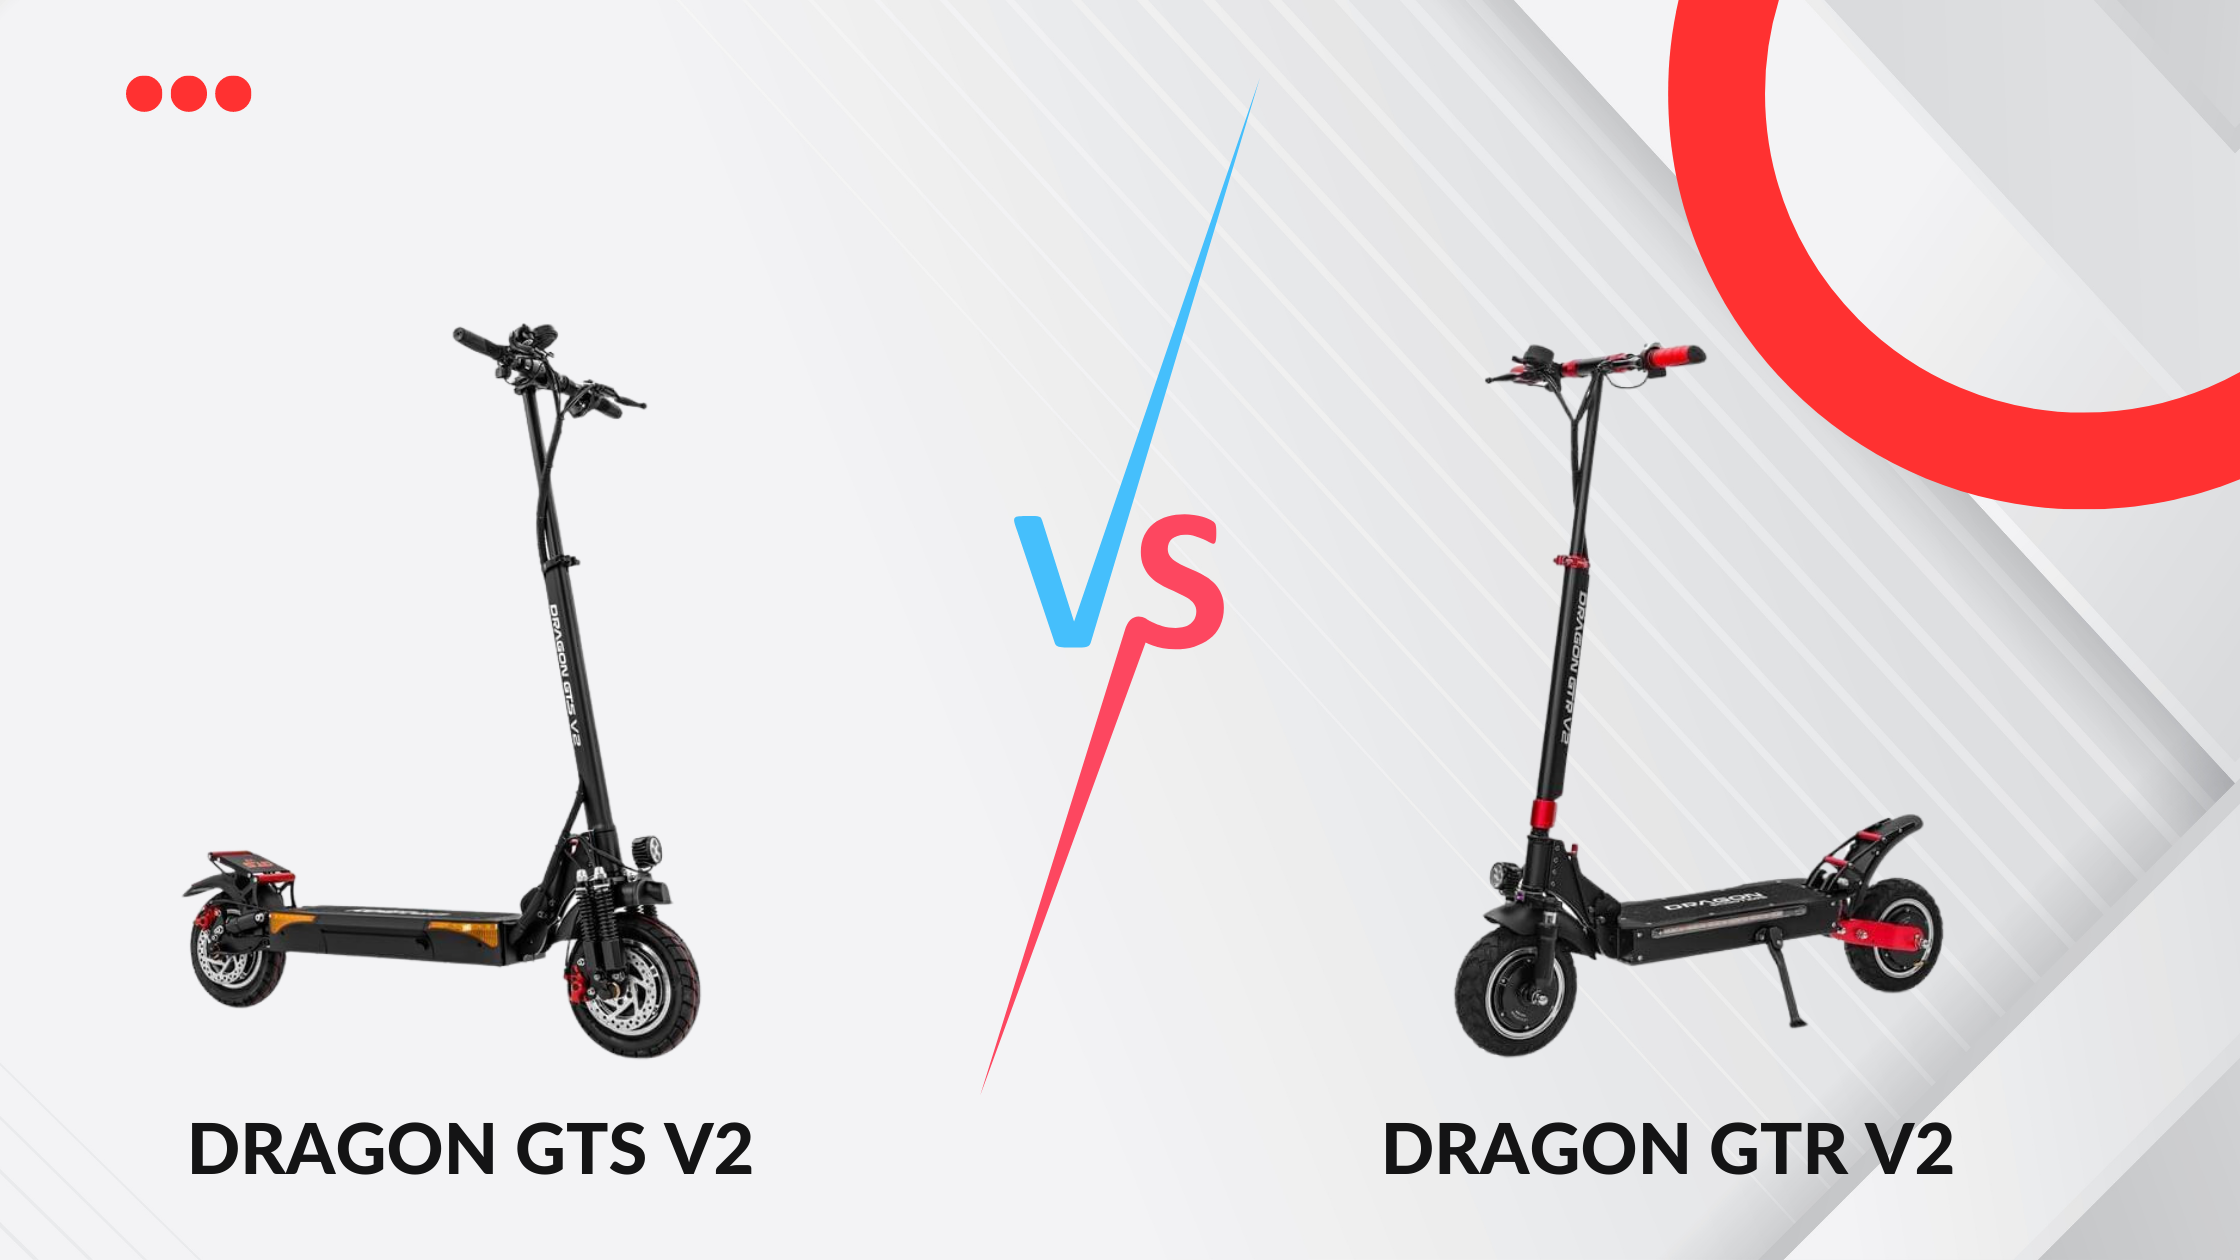 Dragon GTS V2 vs GTR V2: Which Is the Better Choice?